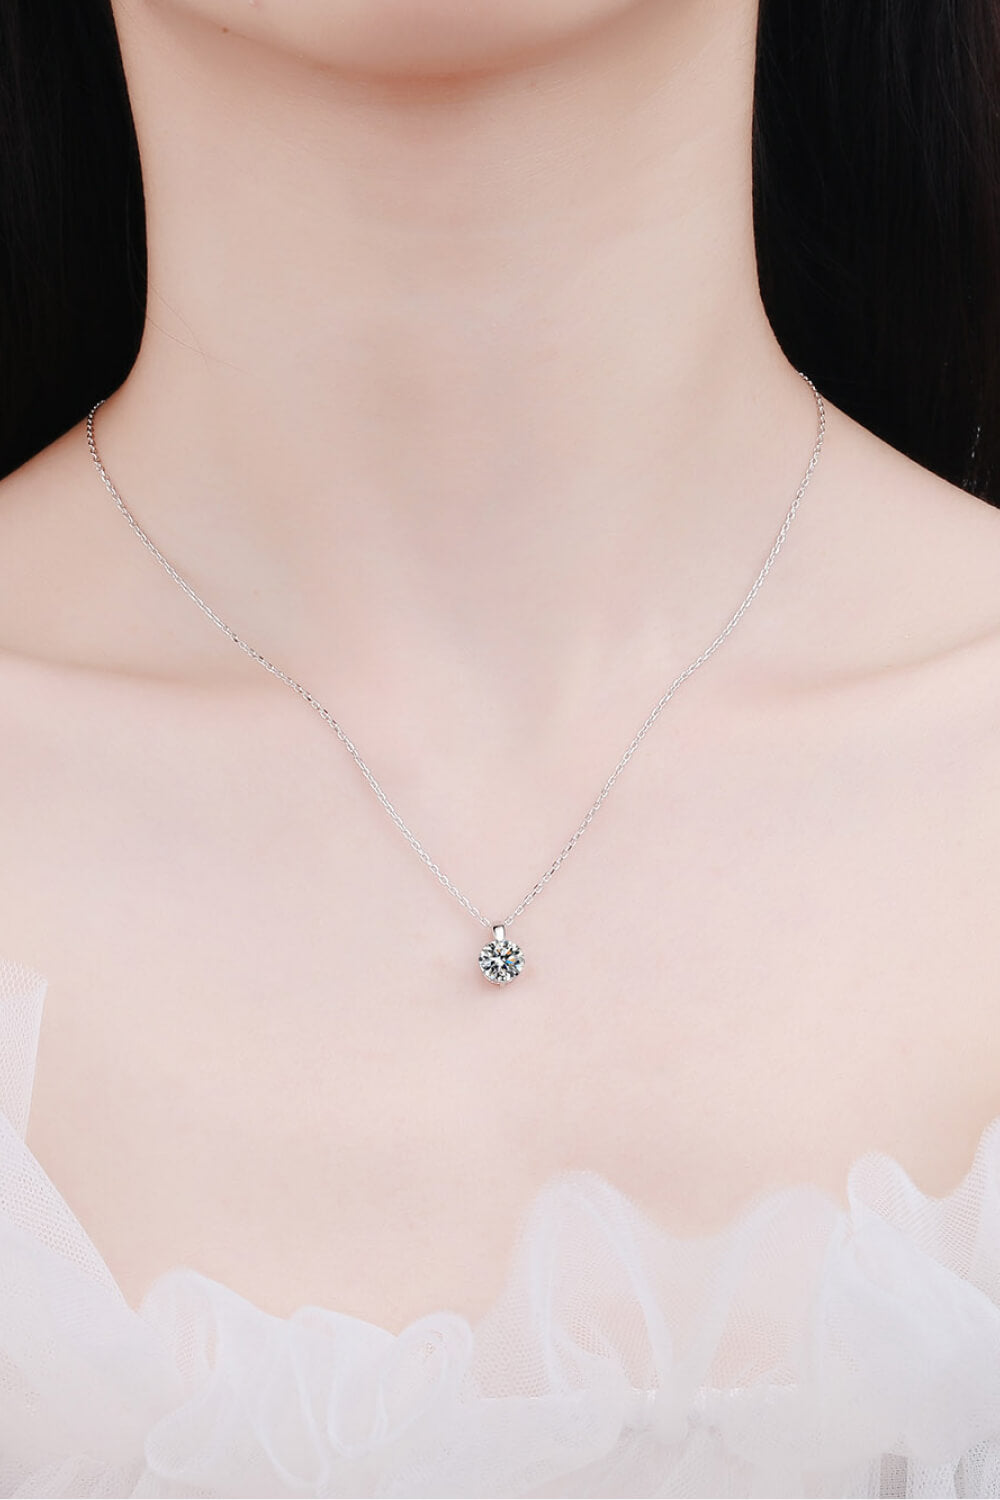 Women’s Minimalist 925 Sterling Silver Moissanite Pendant Necklace